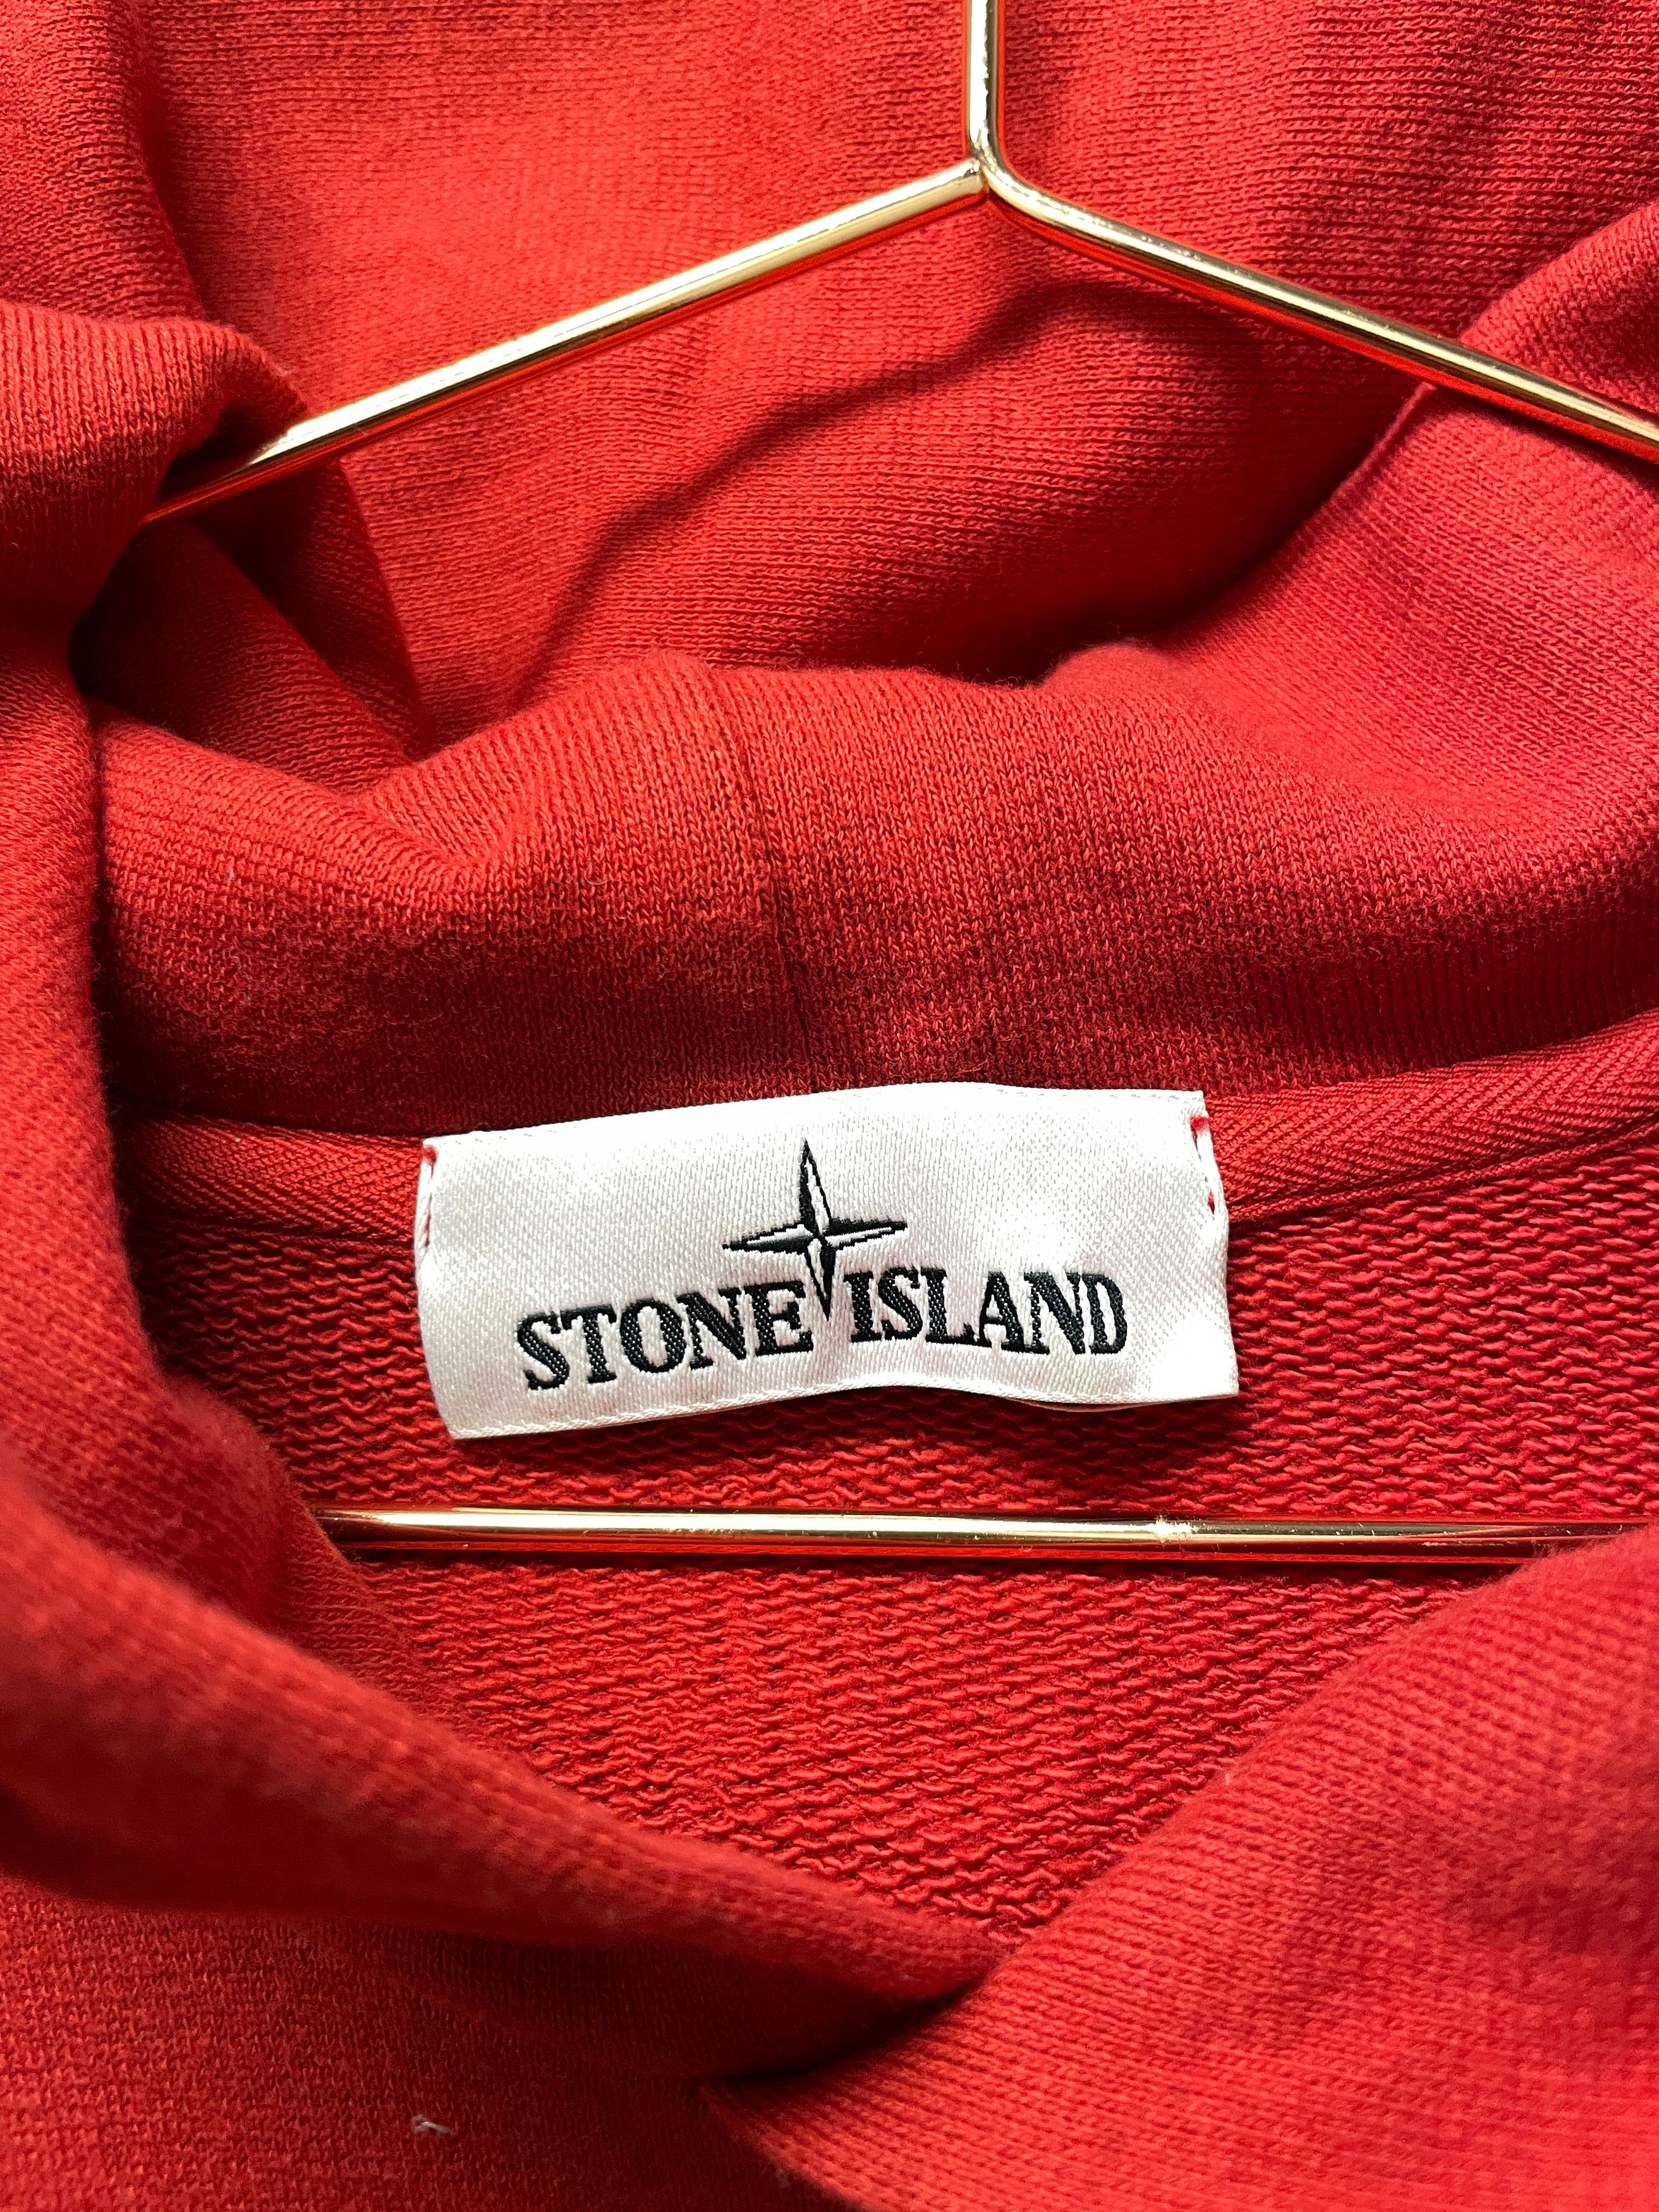 Stone Island Stone Island Hoodie Size S / US 4 / IT 40 - 3 Thumbnail